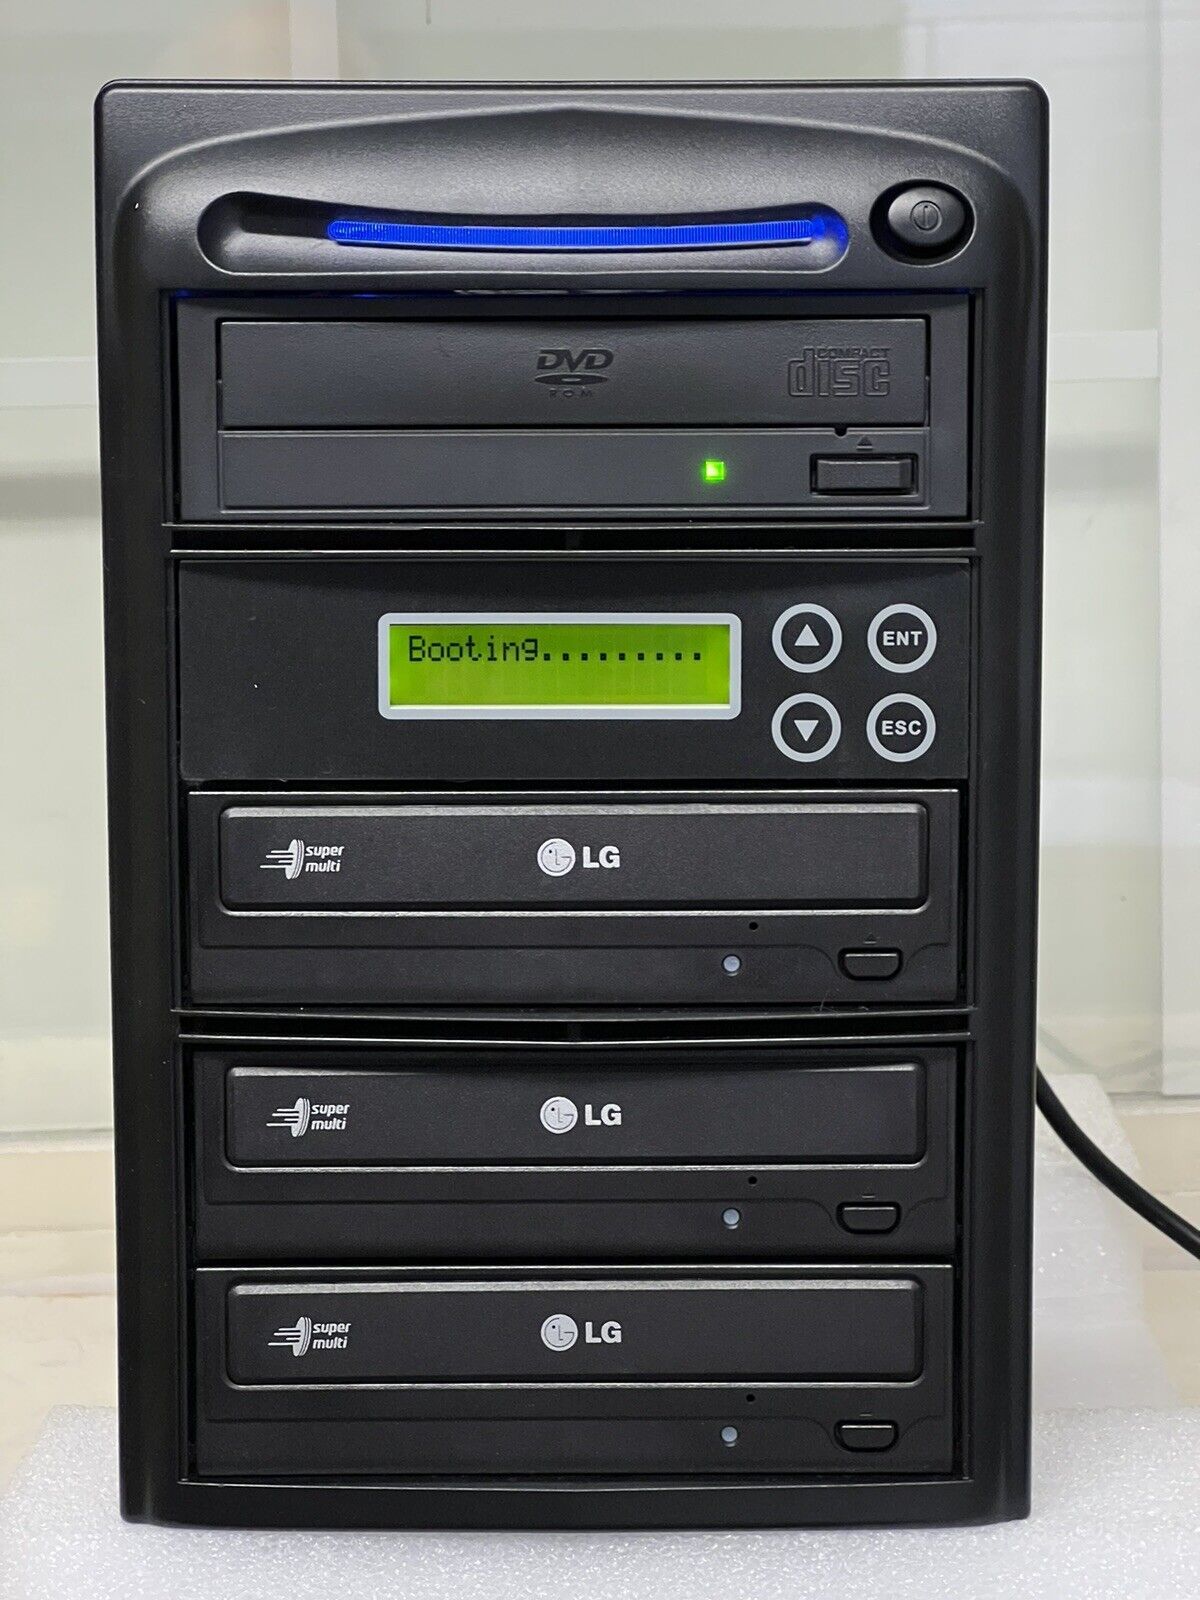 LG Pro Duplicator 1 TO 3 CD DVD Burner Duplication Tower. Manual. Box. Mint.